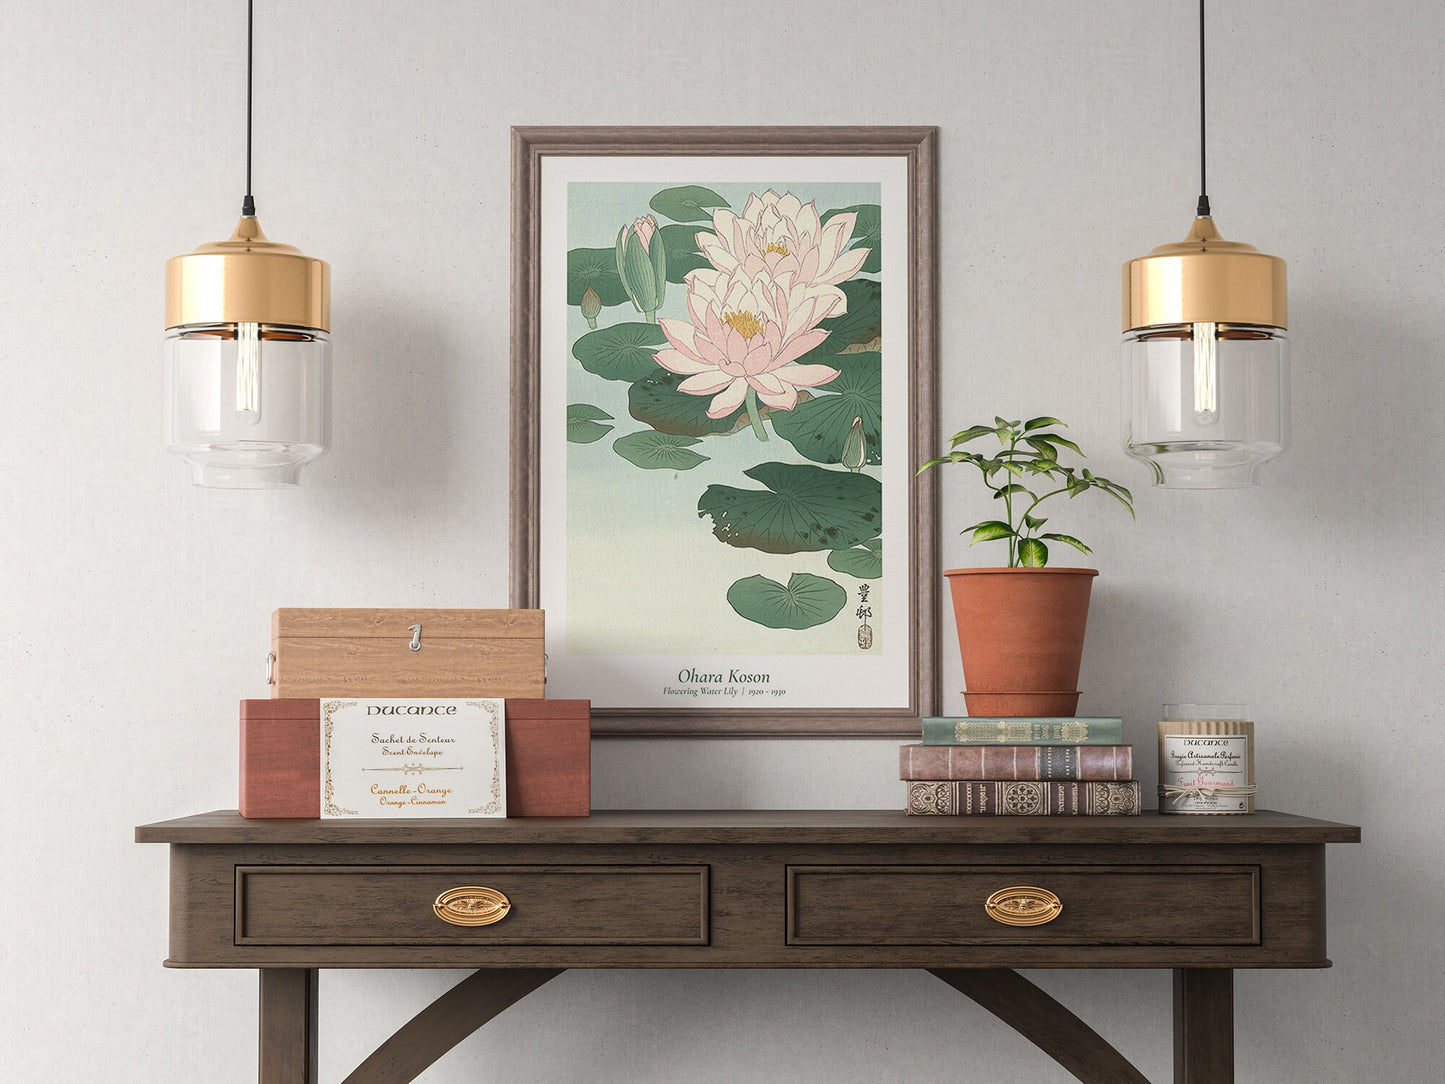 Ohara Koson - Water Lily Japanese Art Print Home Décor Wall Art